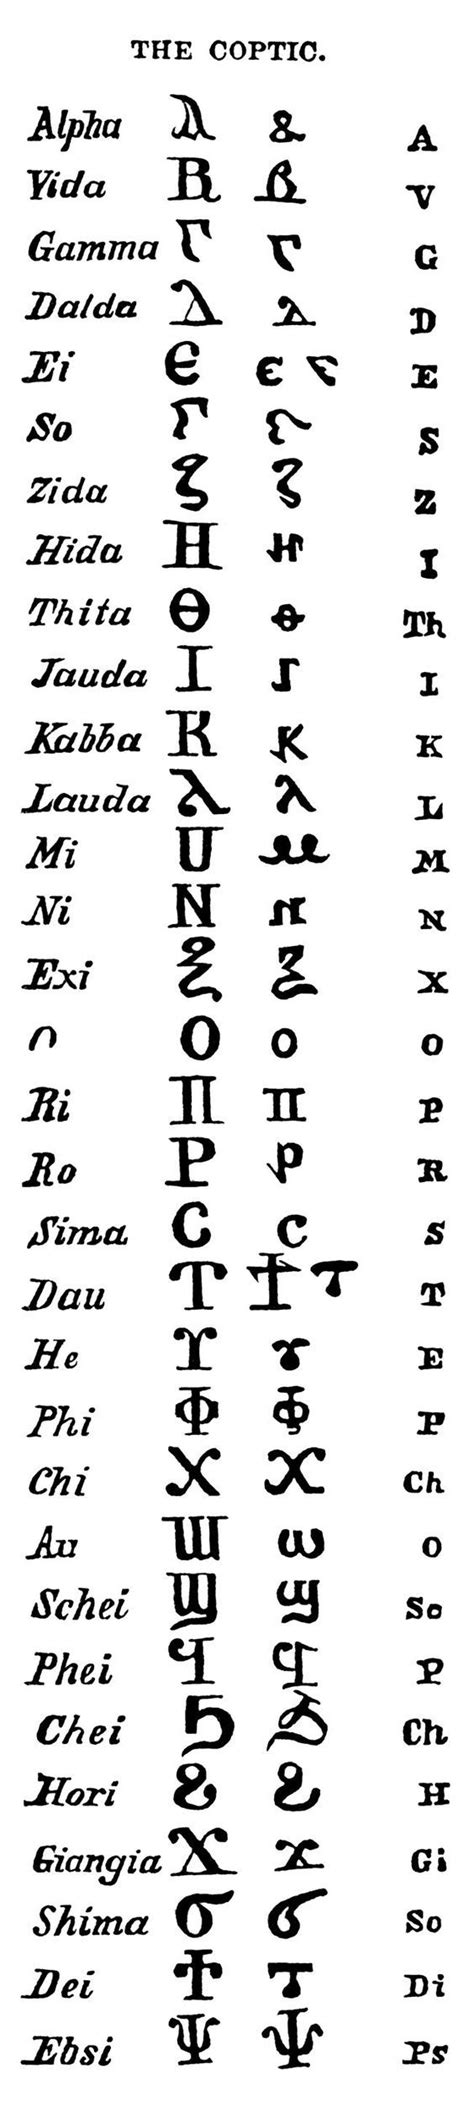 Ancient Alphabets Ancient Alphabets Ancient Writing Greek Alphabet